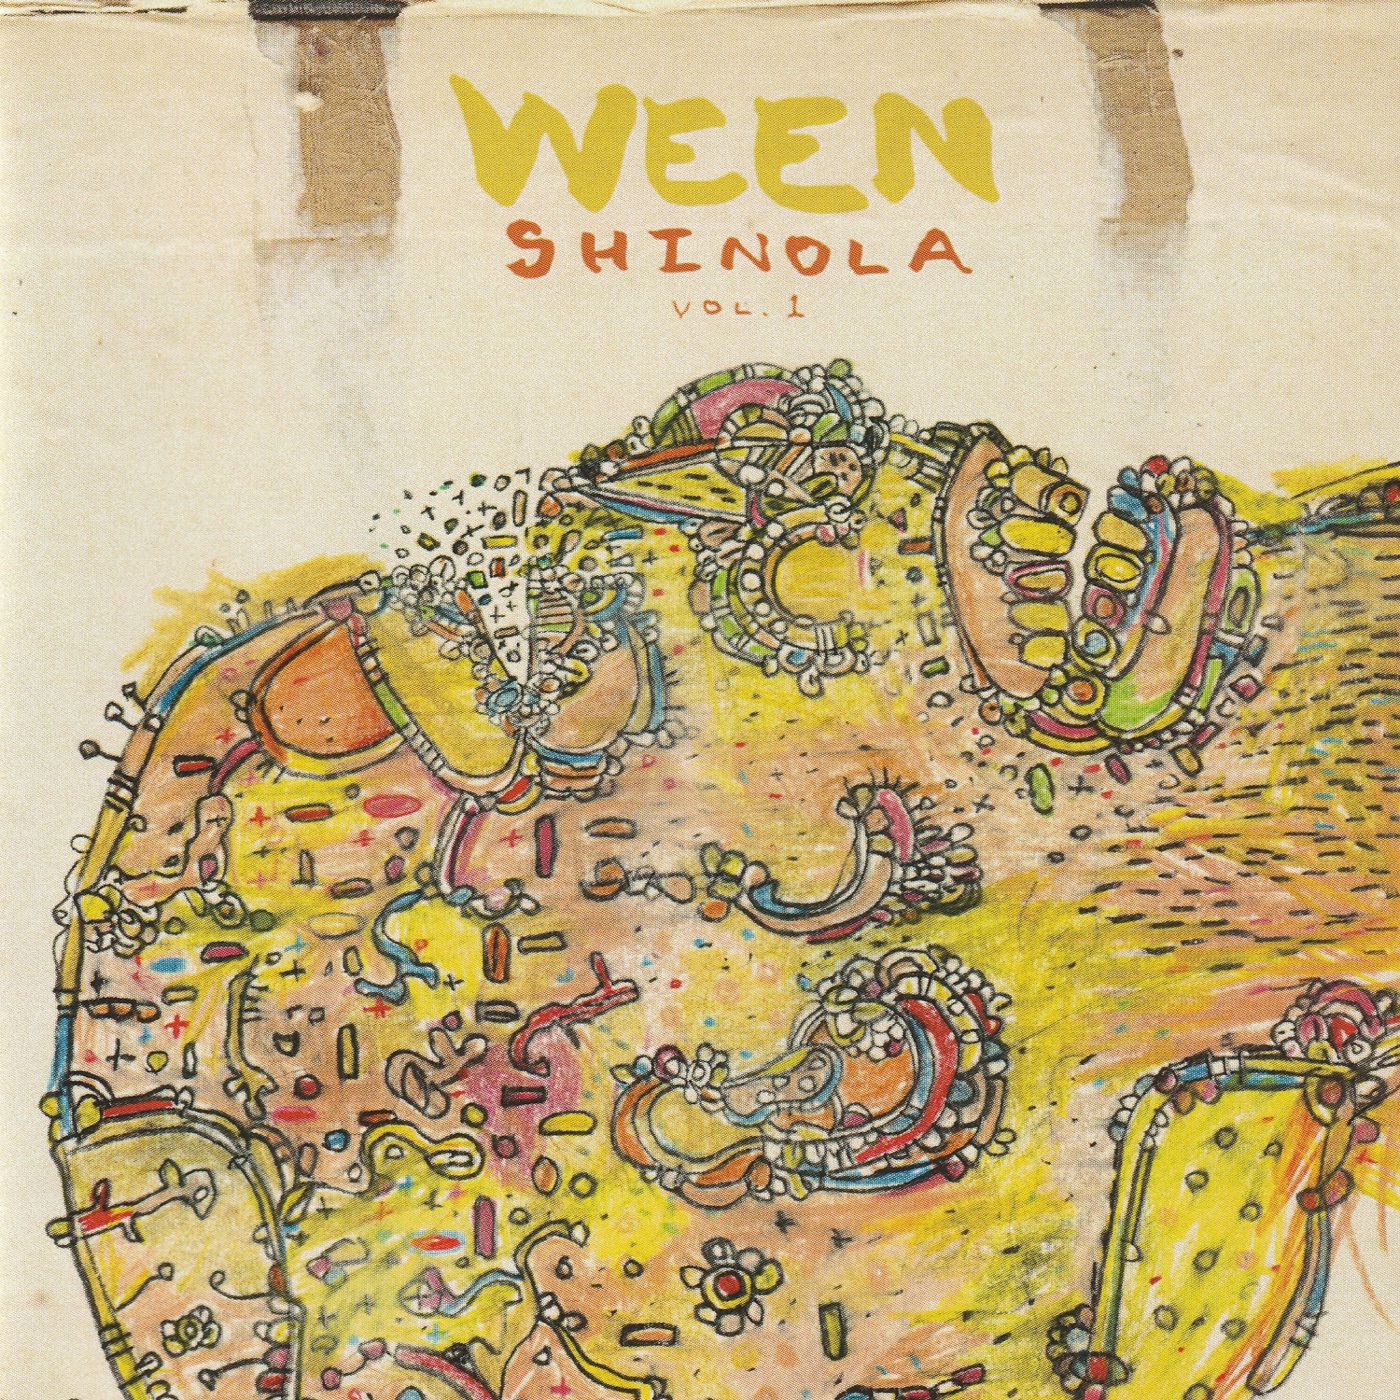 Shinola (Vol. 1) by Ween